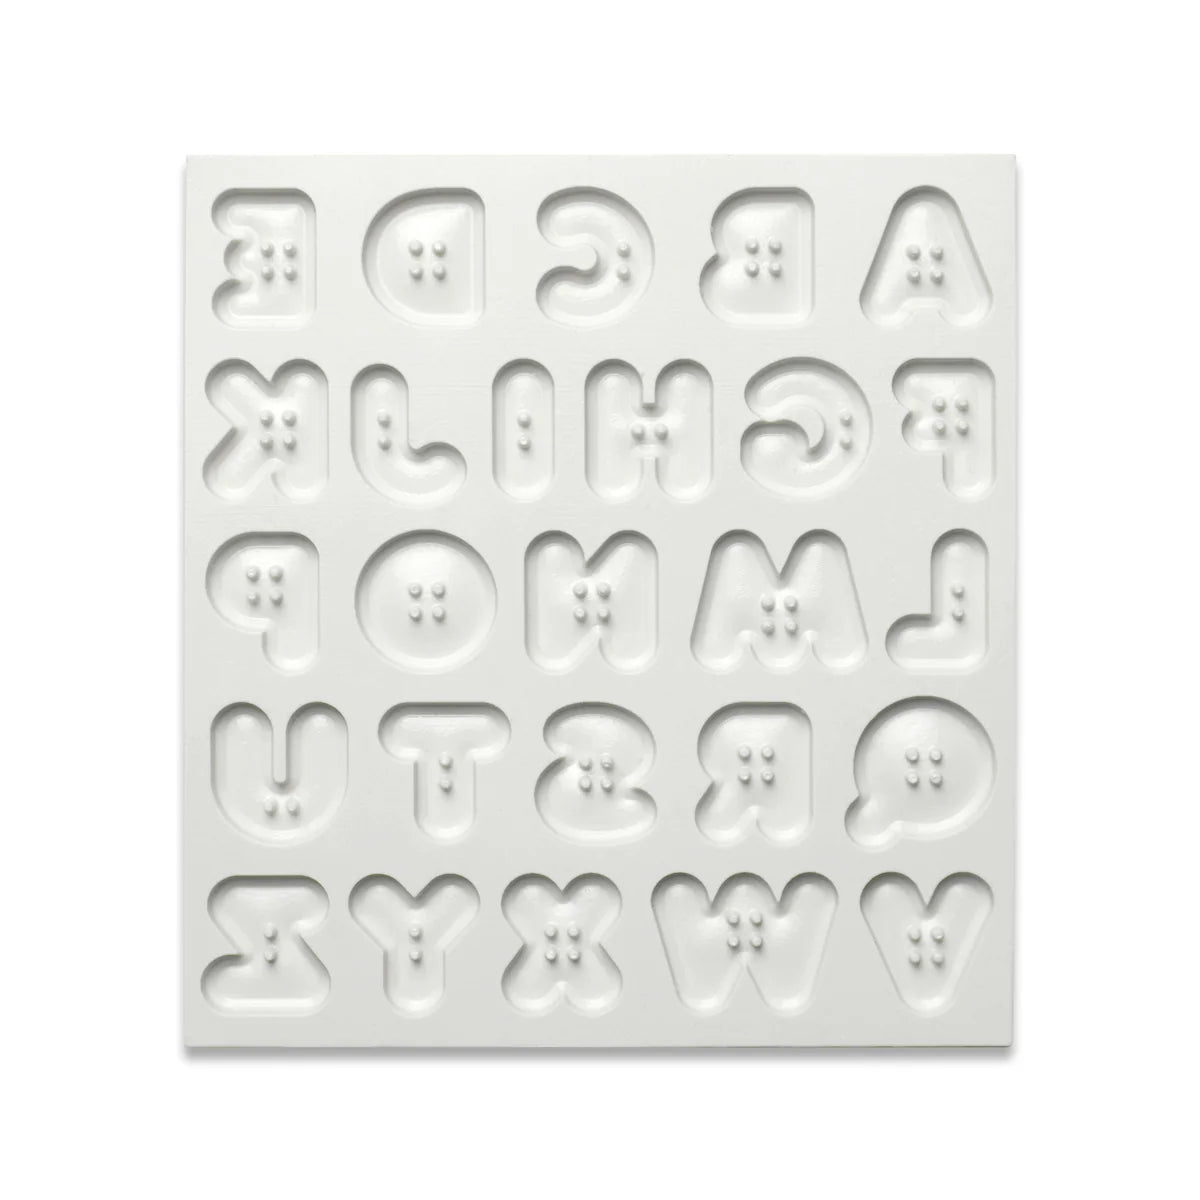 Button Alphabet Silicone Mould